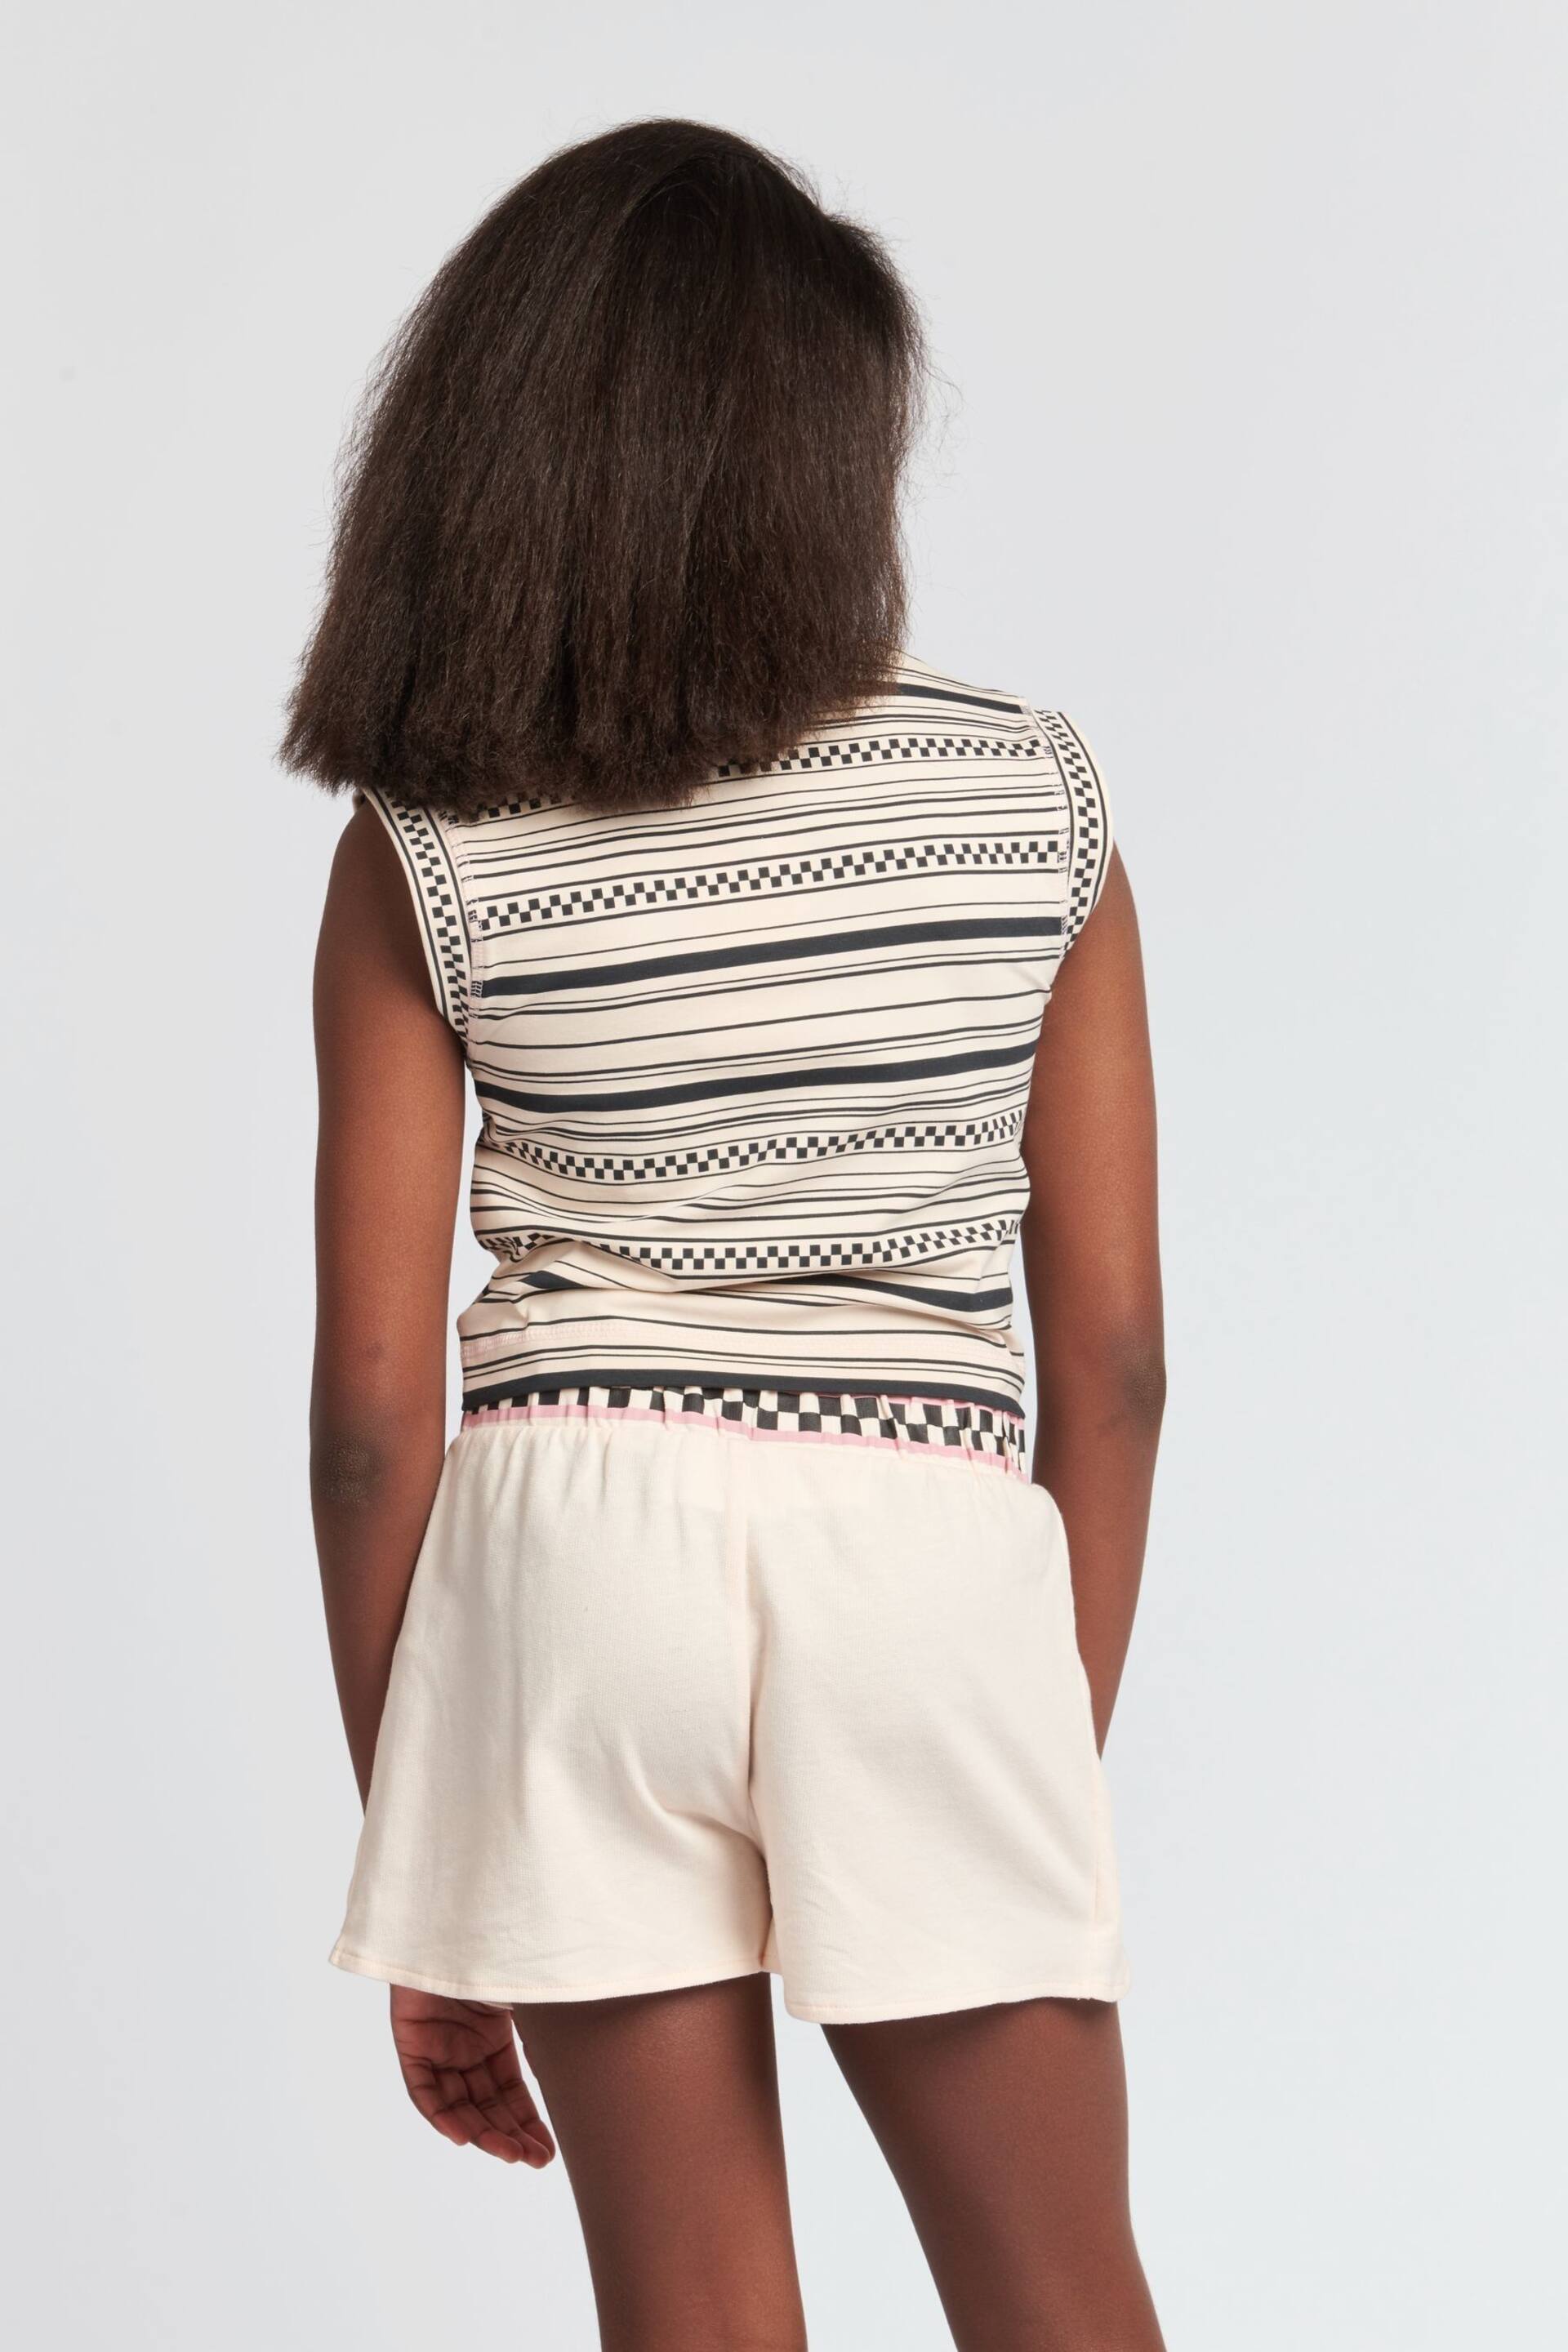 Juicy Couture Girls Cream/Black Turtle Neck Stripe Vest - Image 2 of 4